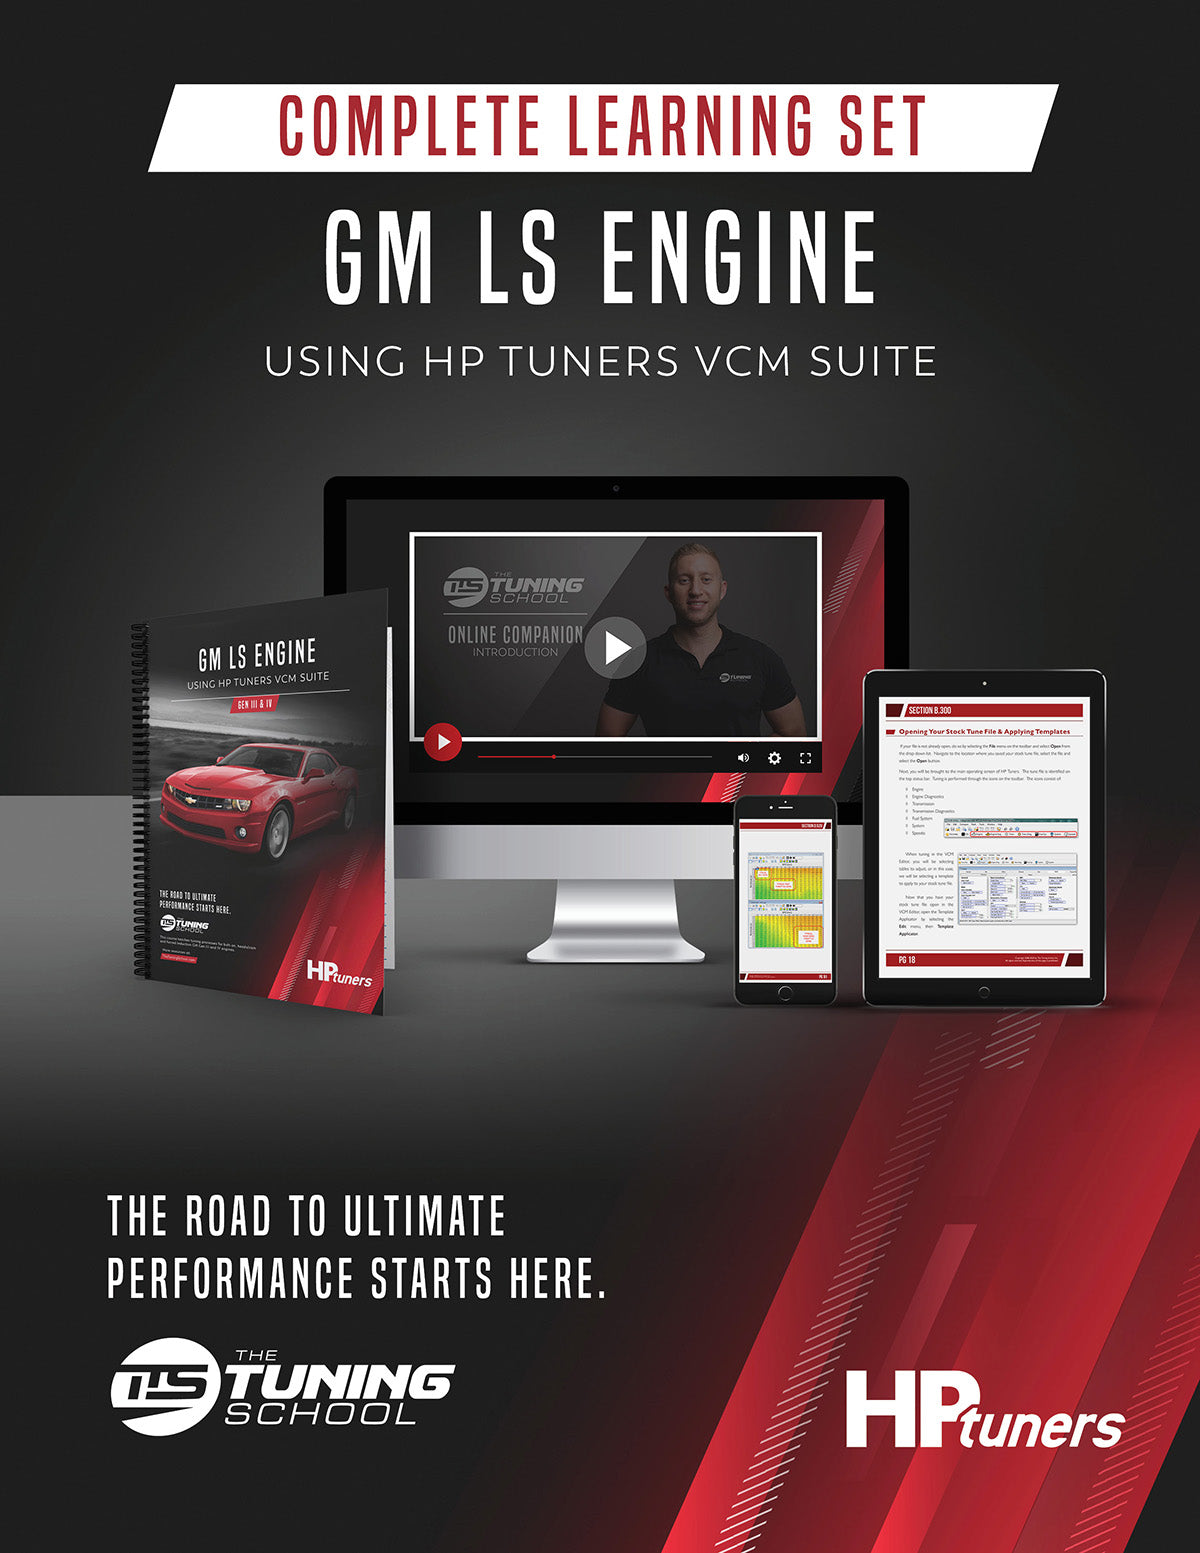 GM LS Engine Complete Learning Set